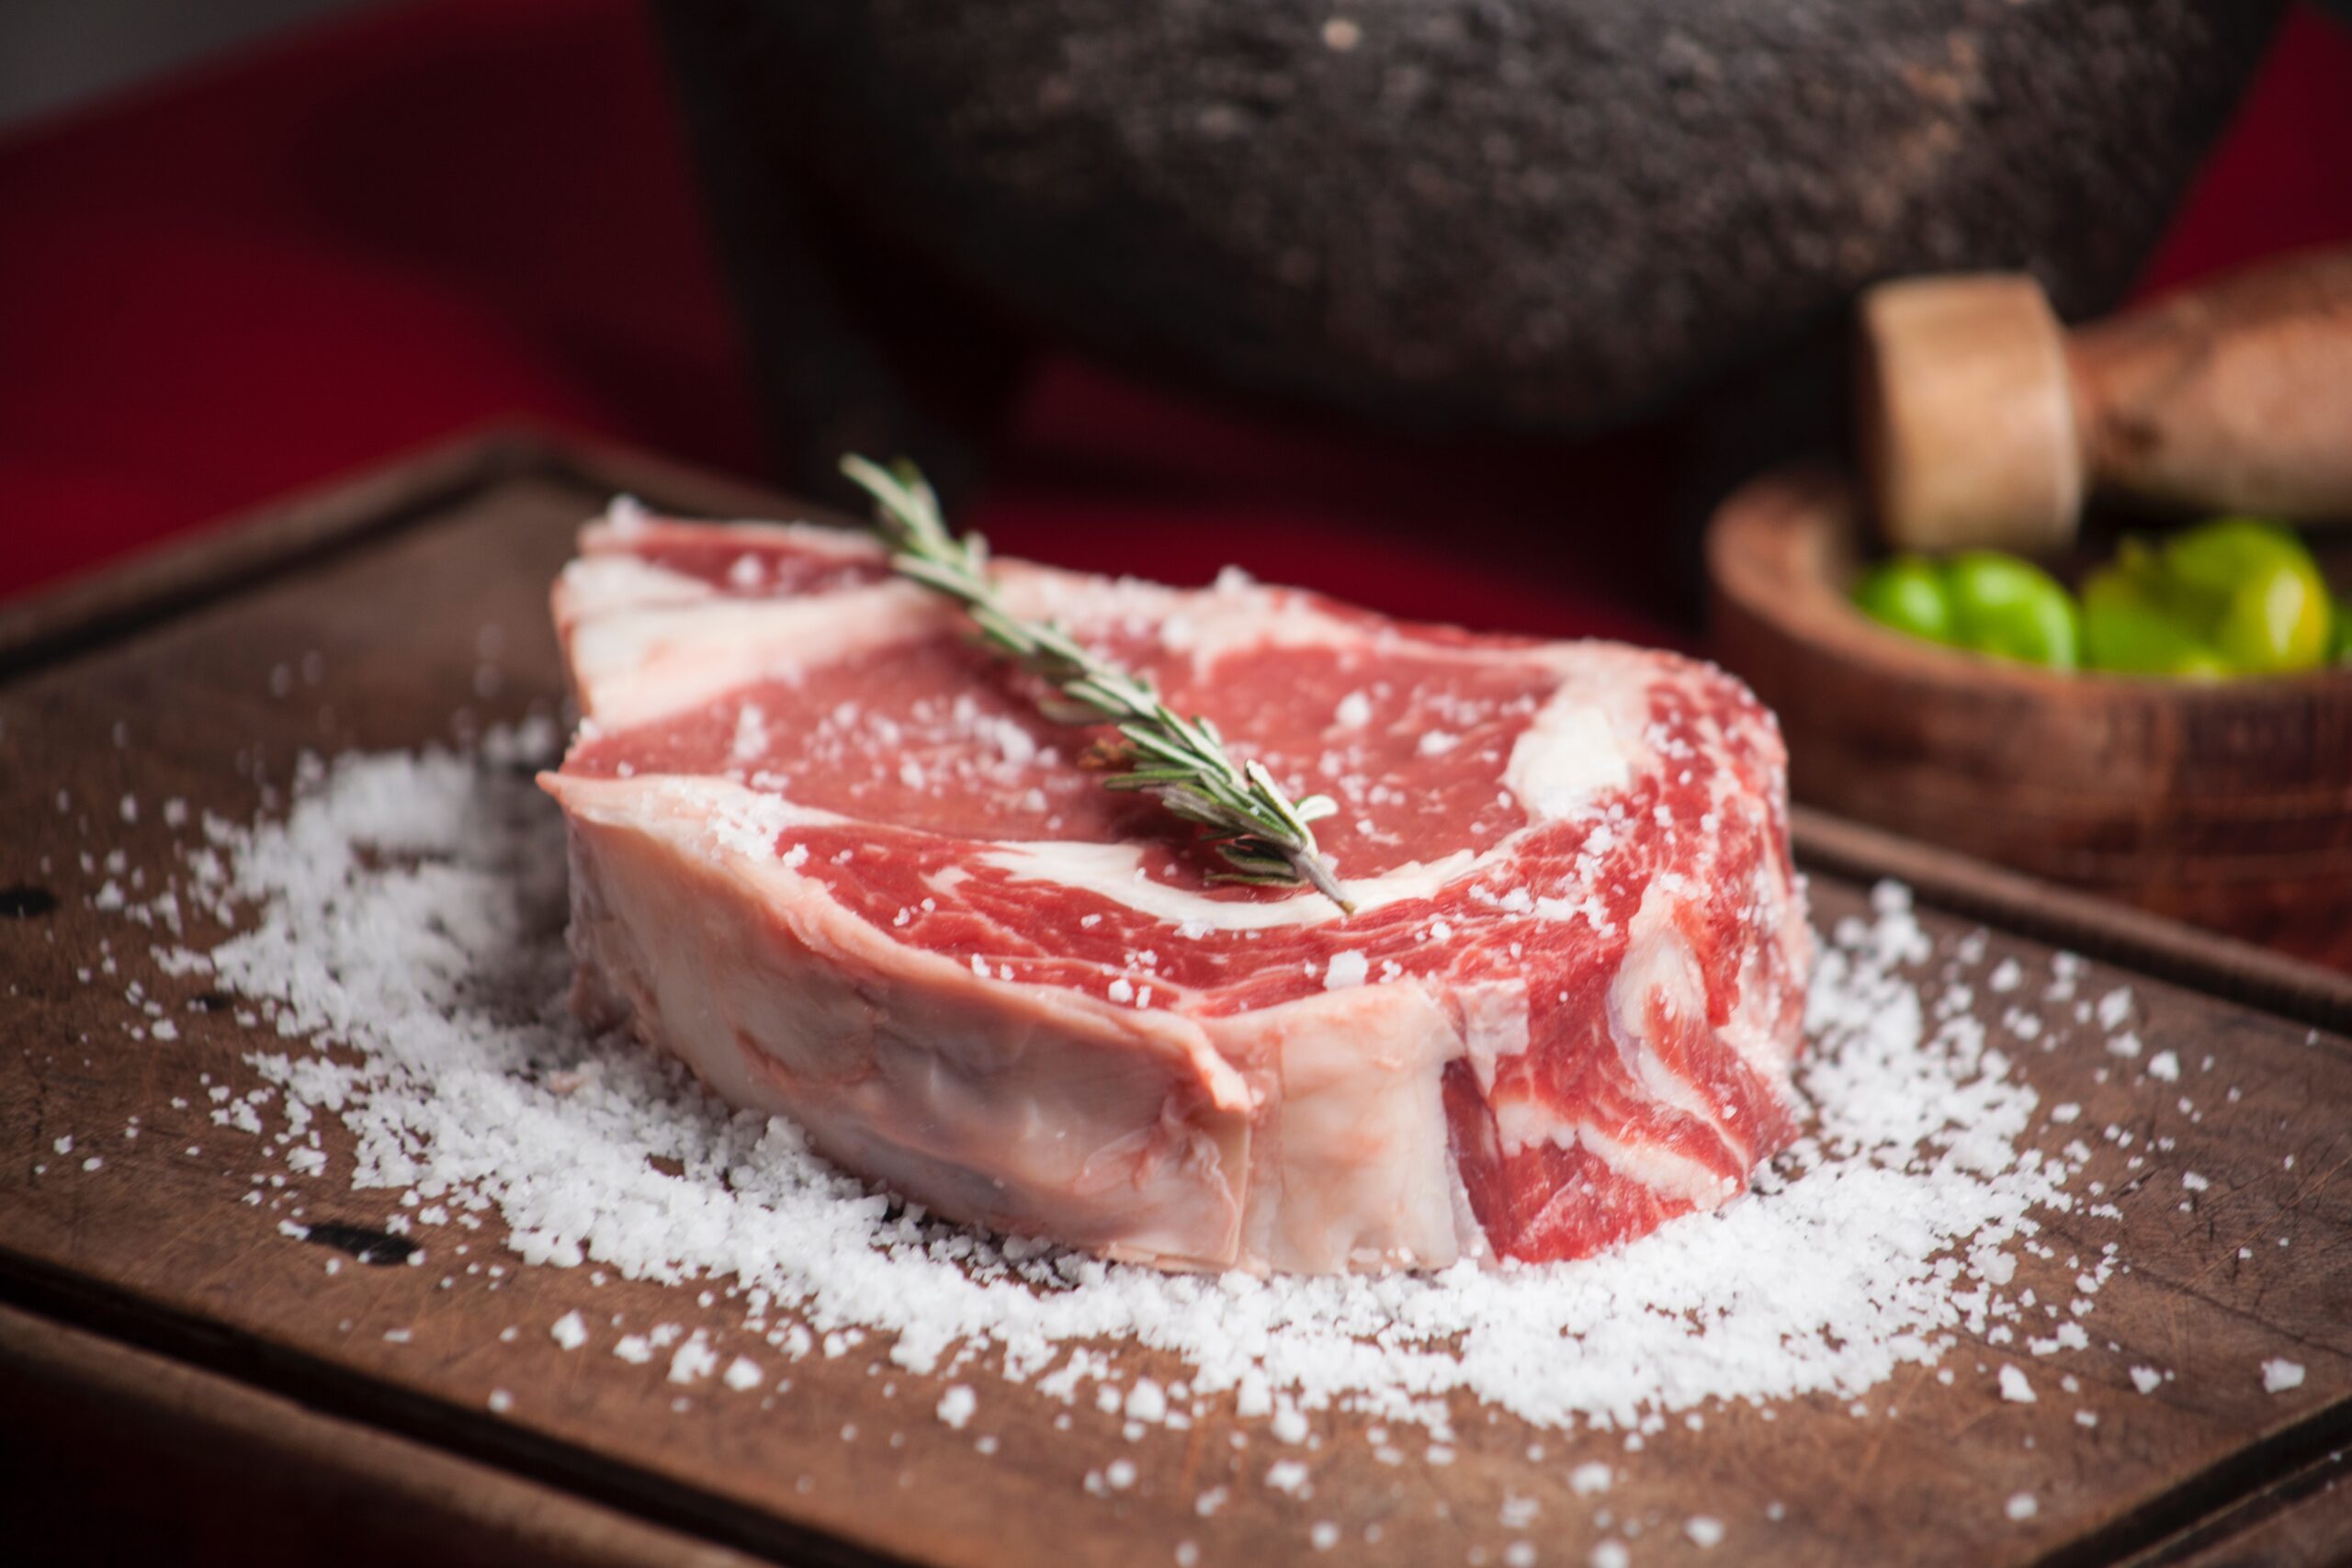 Steak marinated in salt with rosemary garnish to pair with lambrusco